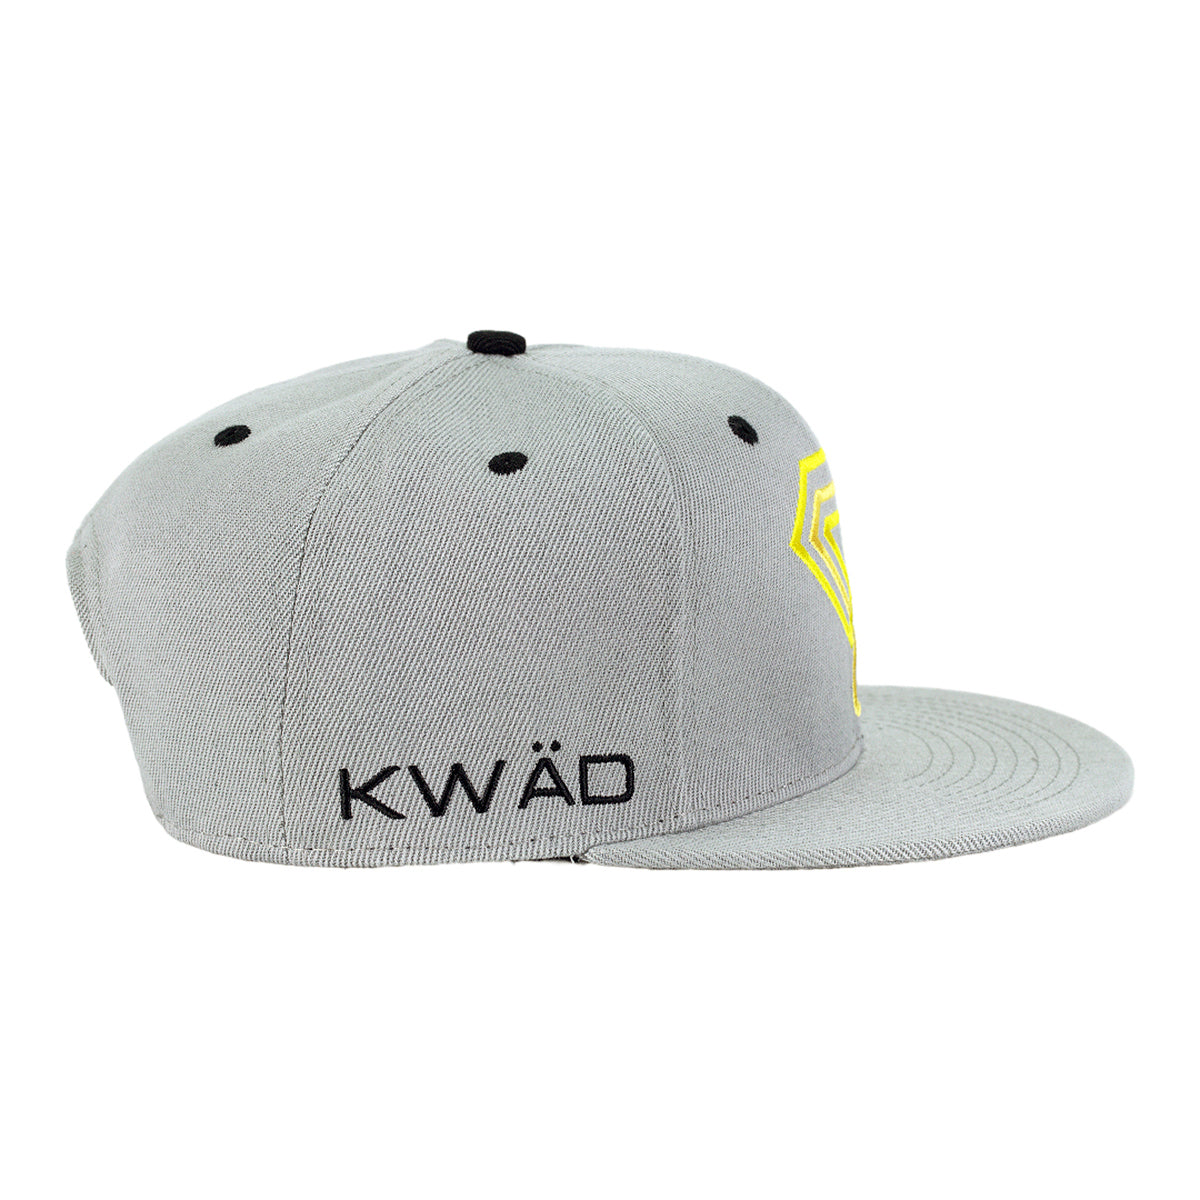 KWAD Logo - Grey - Access Rosin